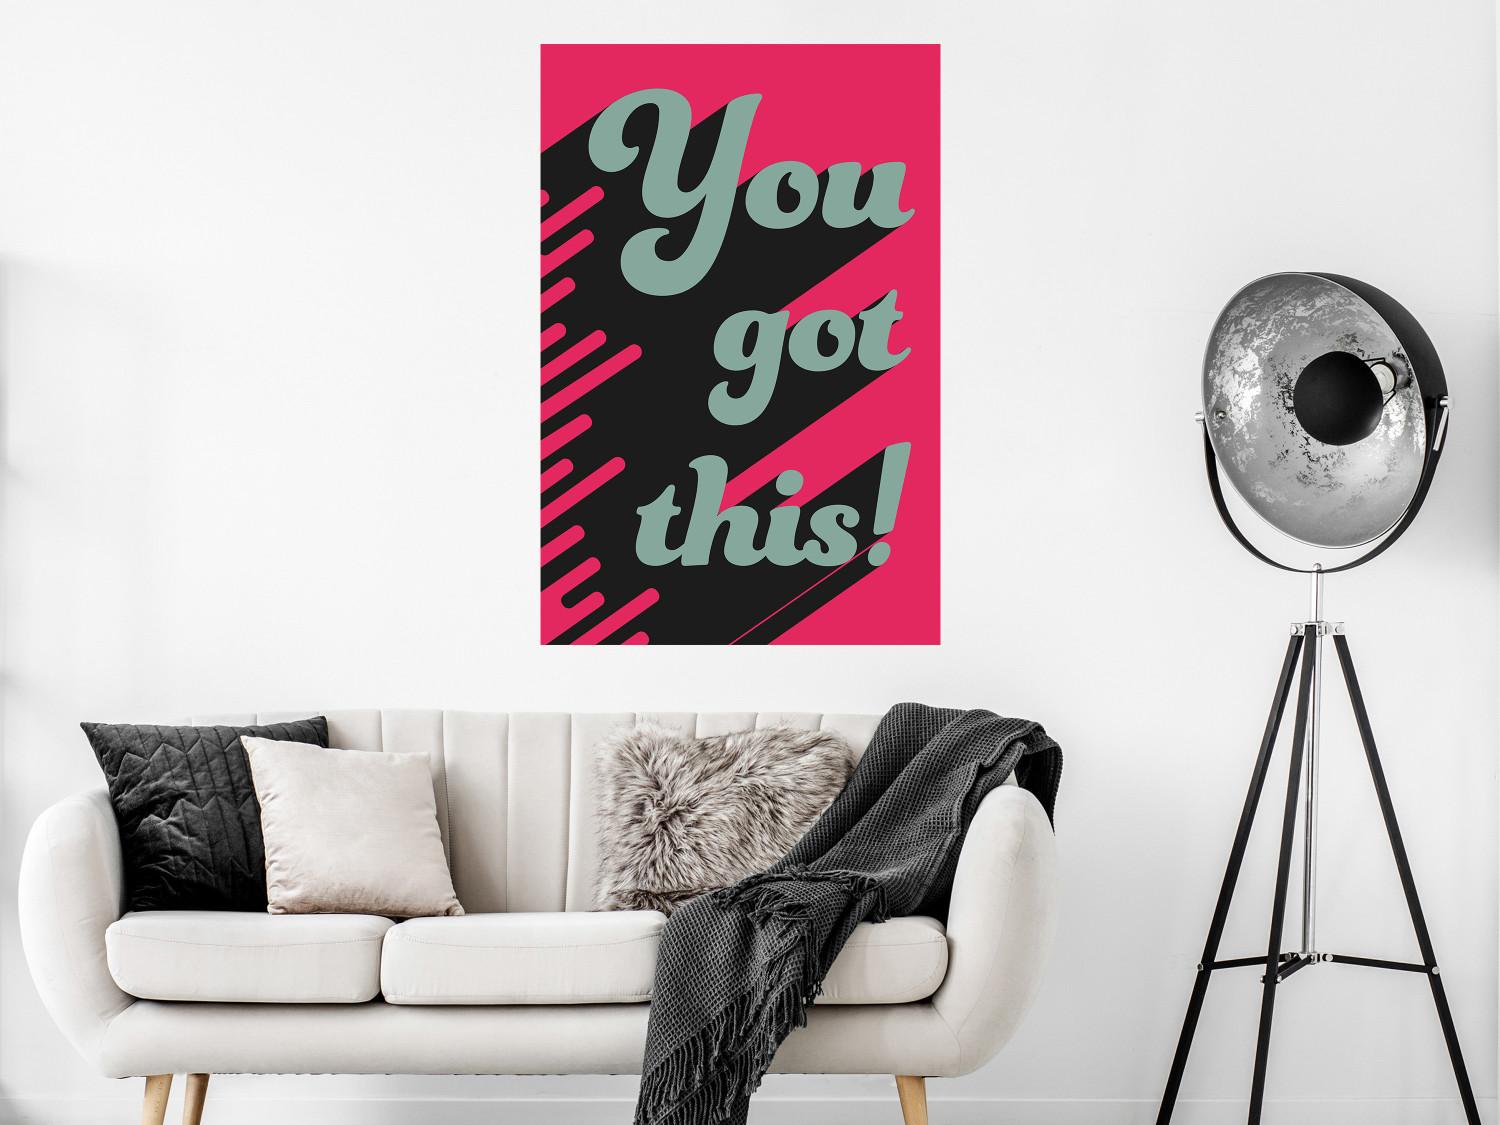 Poster ¡Lo conseguirás! - letras grises en inglés sobre fondo rosa intenso